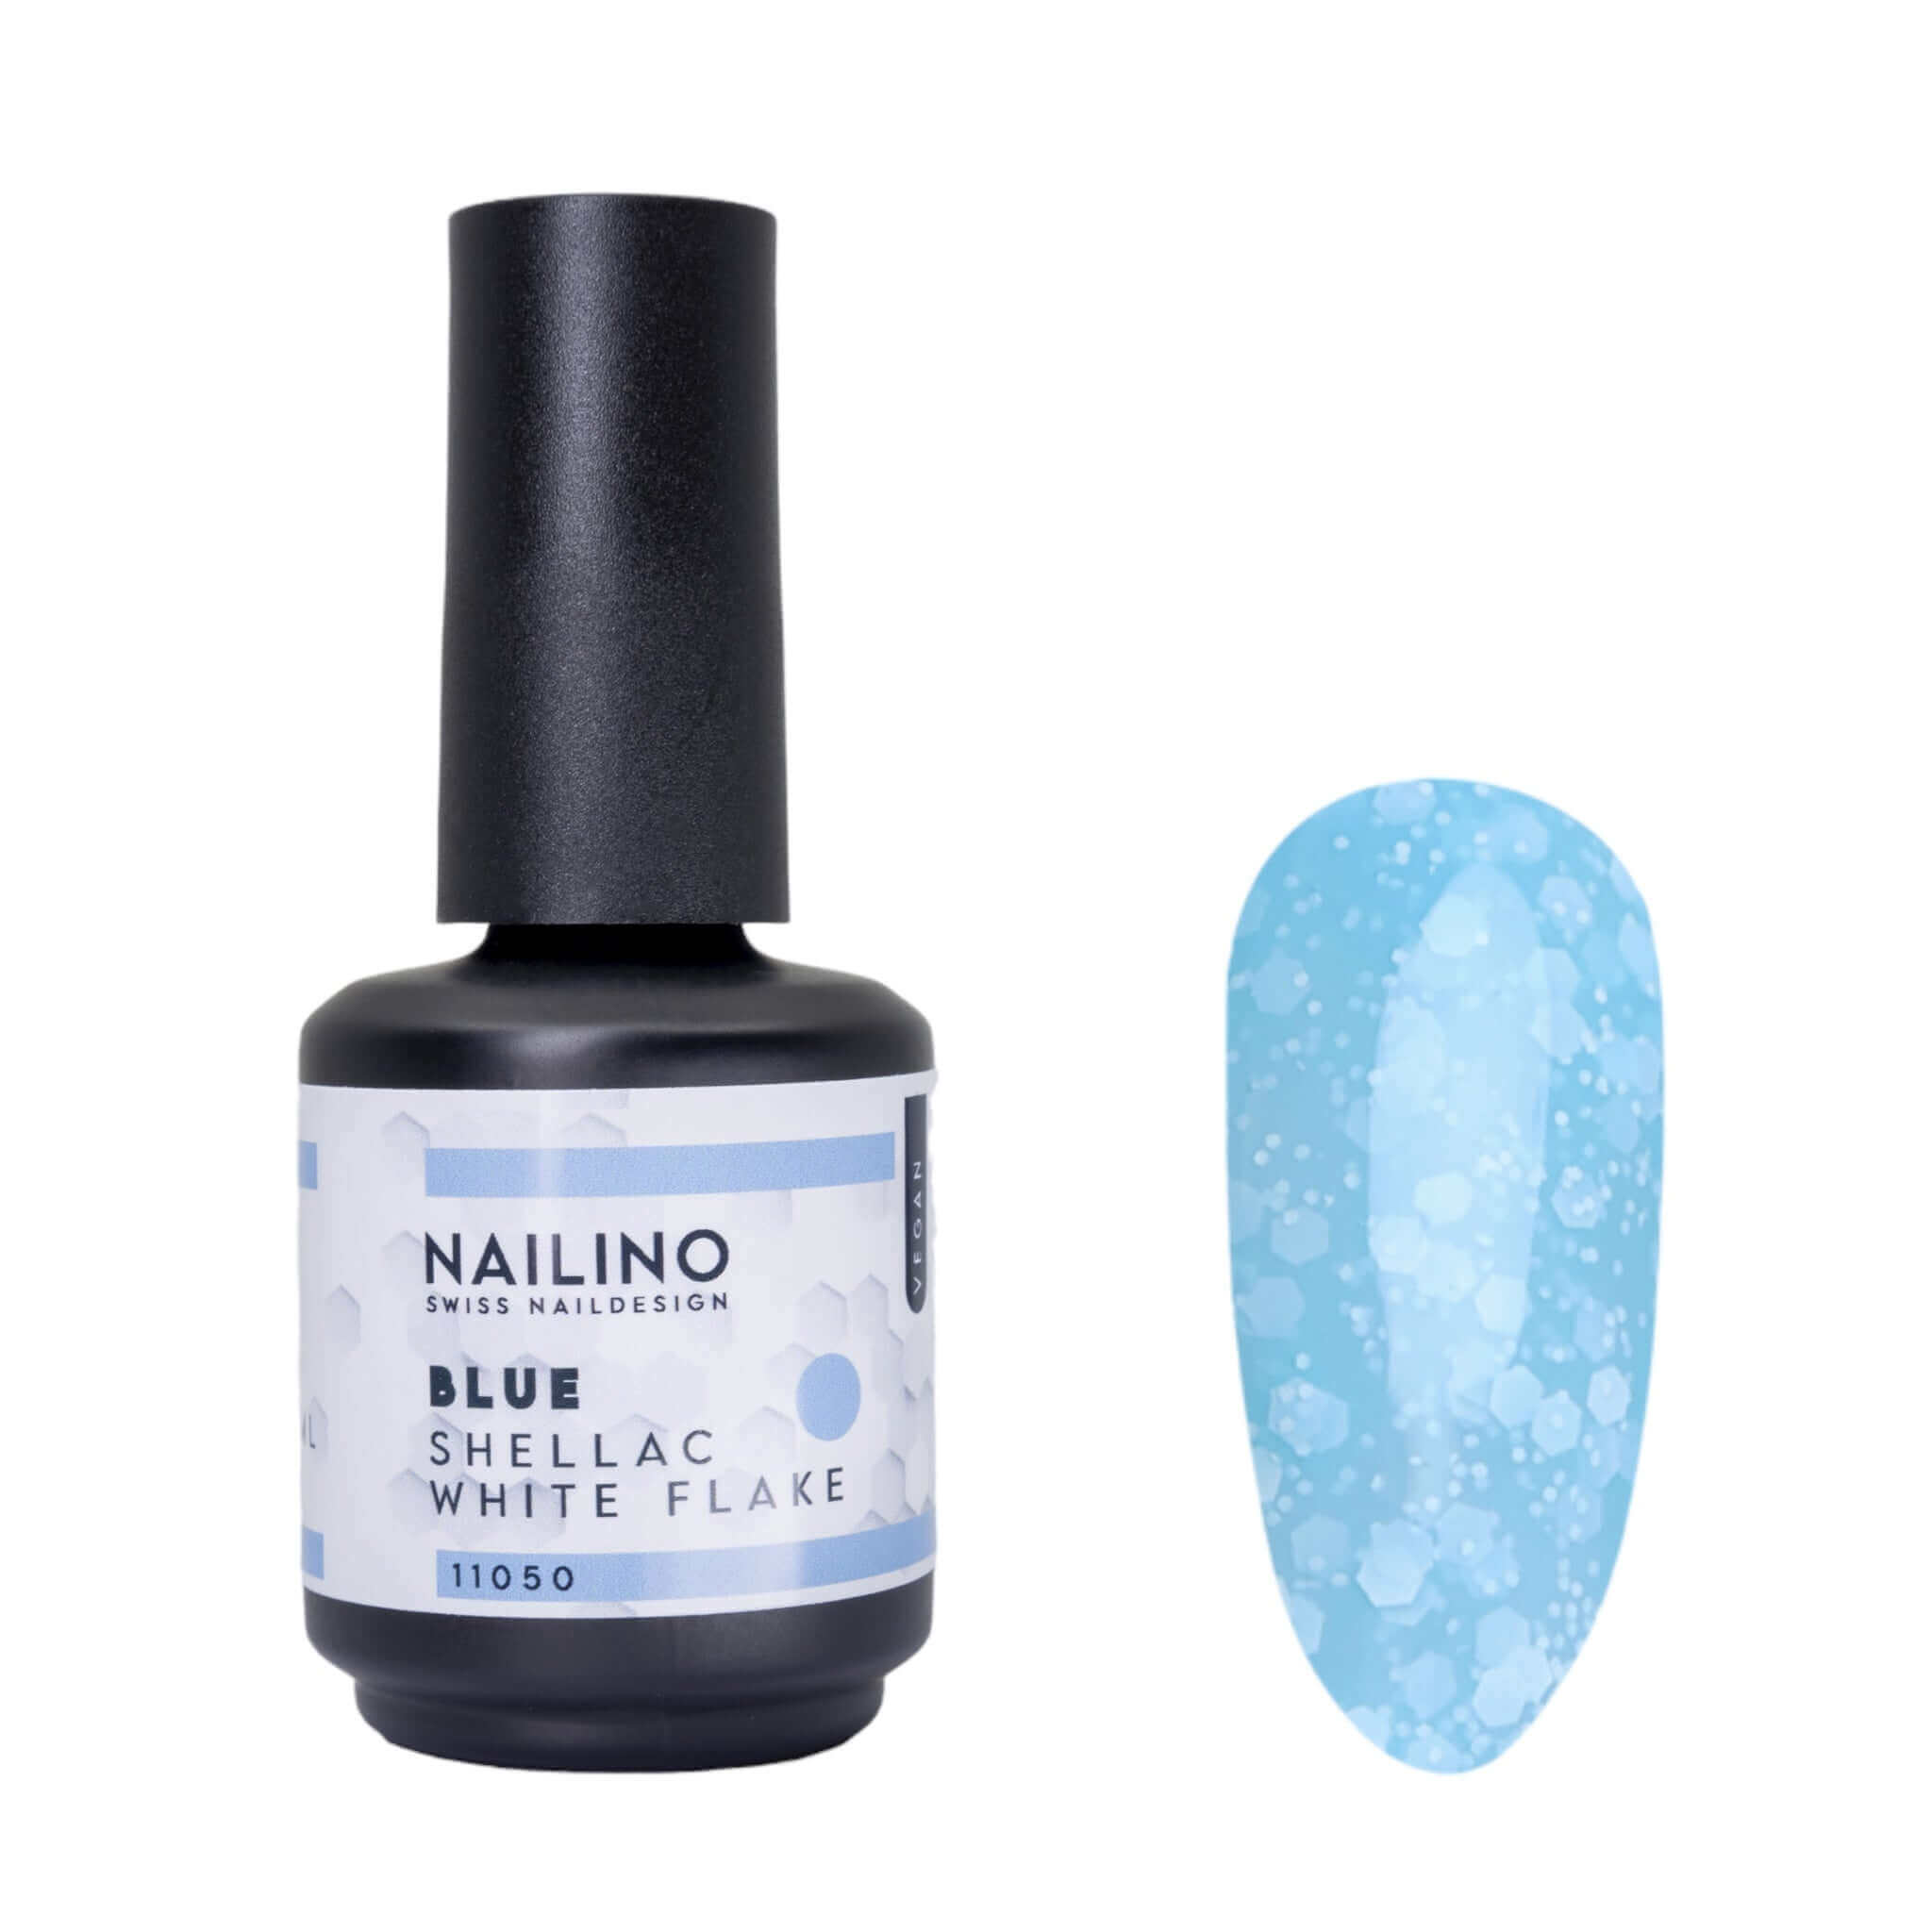 NAILINO Shellac White Flake Blue -